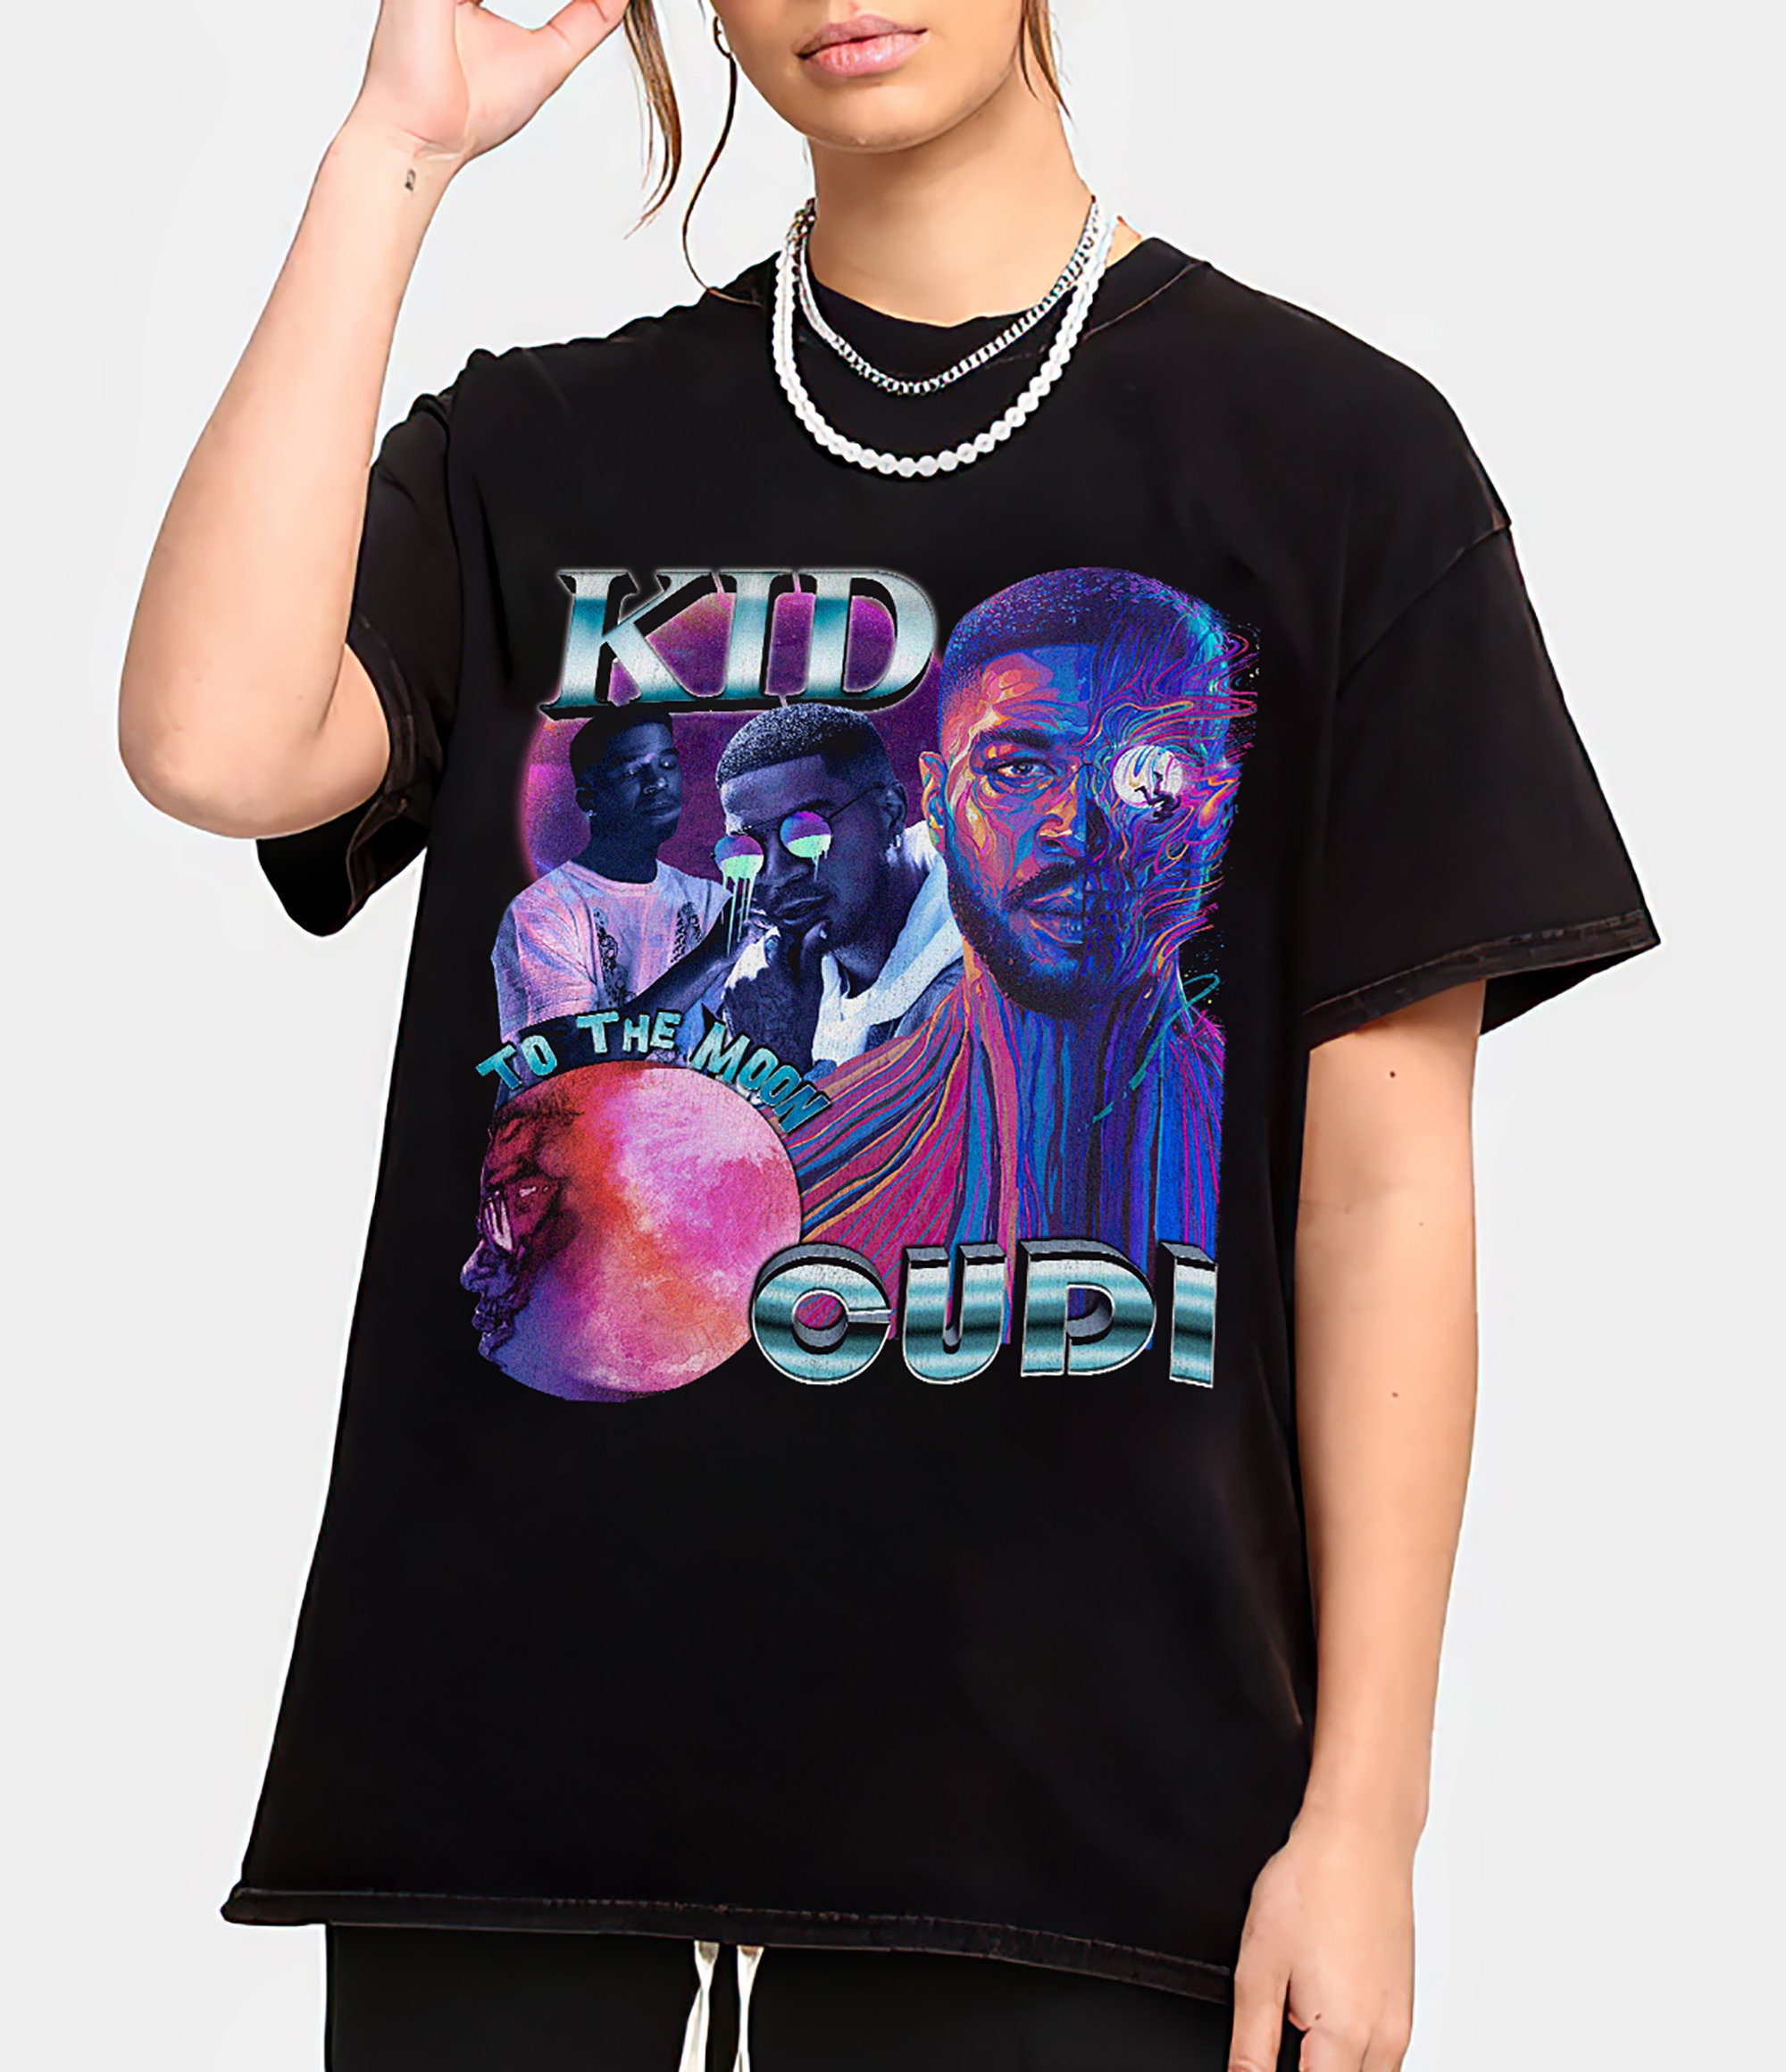 Kid Cudi To The Moon Tour トレーナーファッション